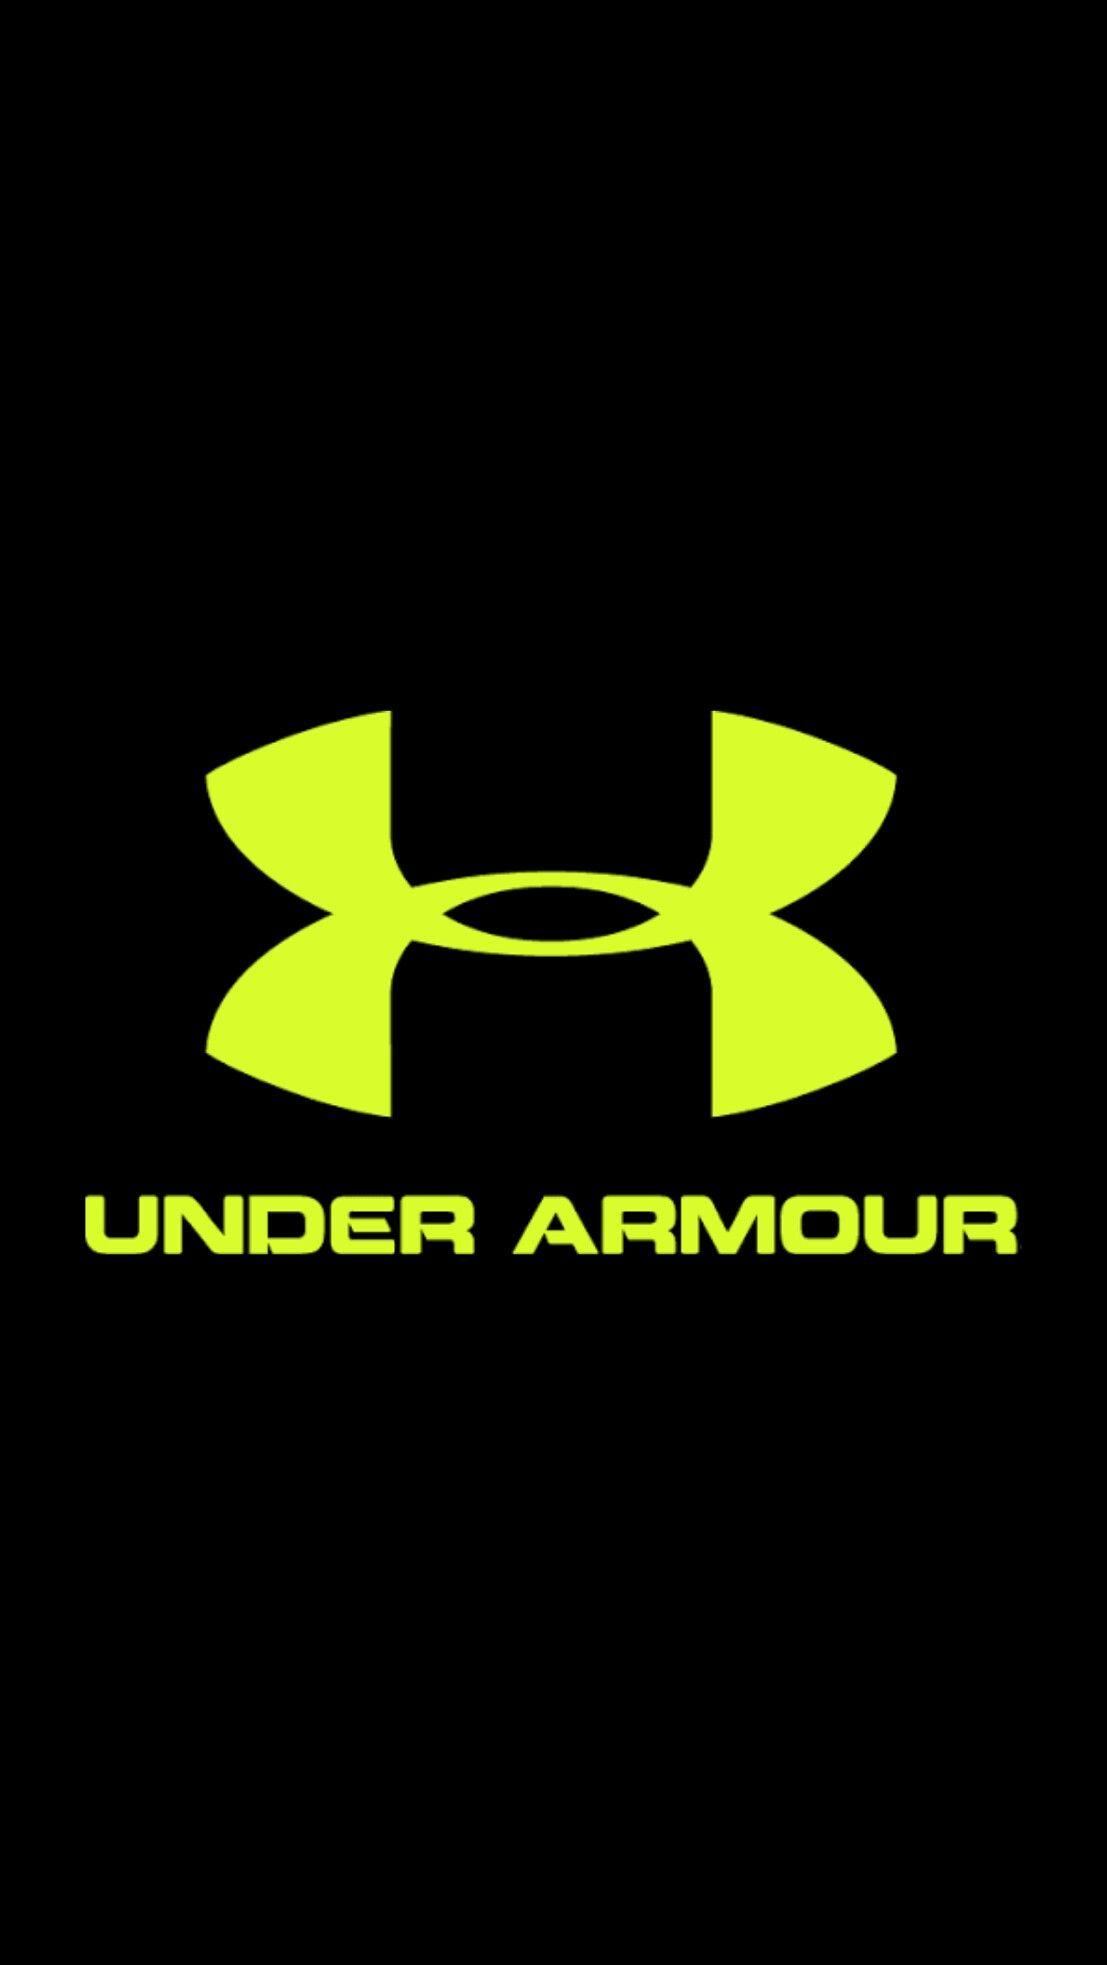 Aromor Umder Logo - Wallpaper. Under armour, Armour, Under armour